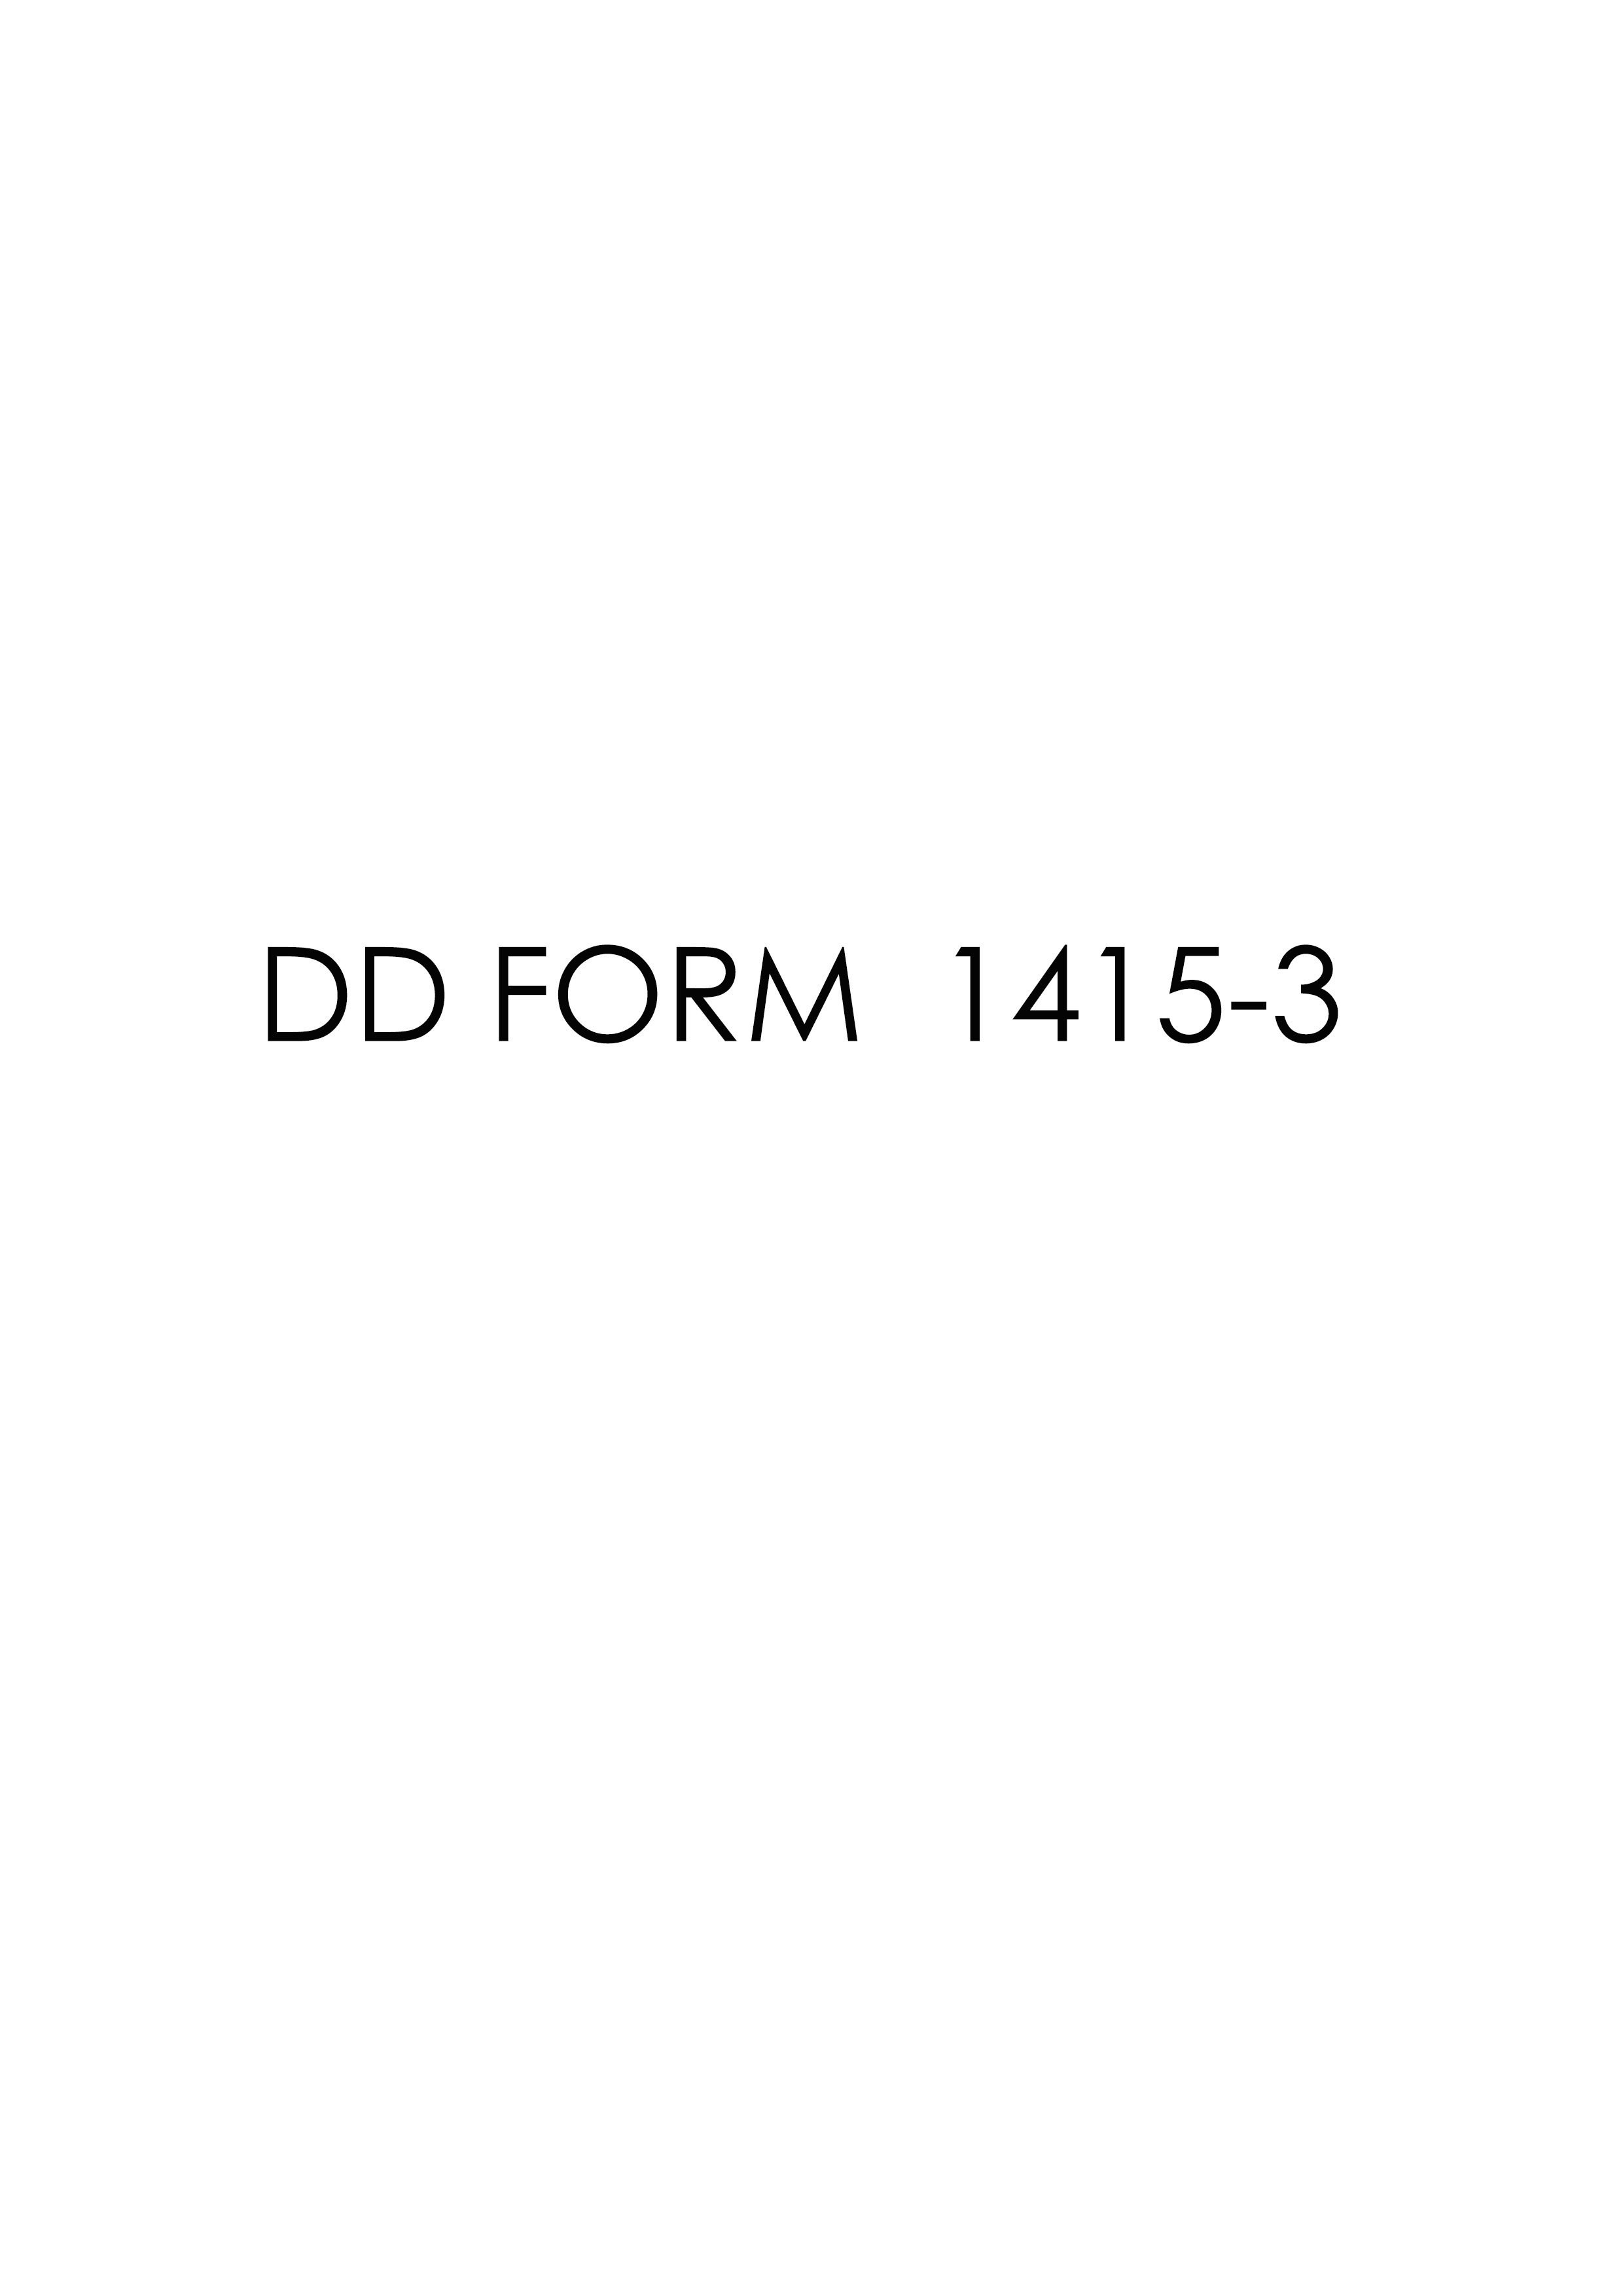 Download dd form 1415-3